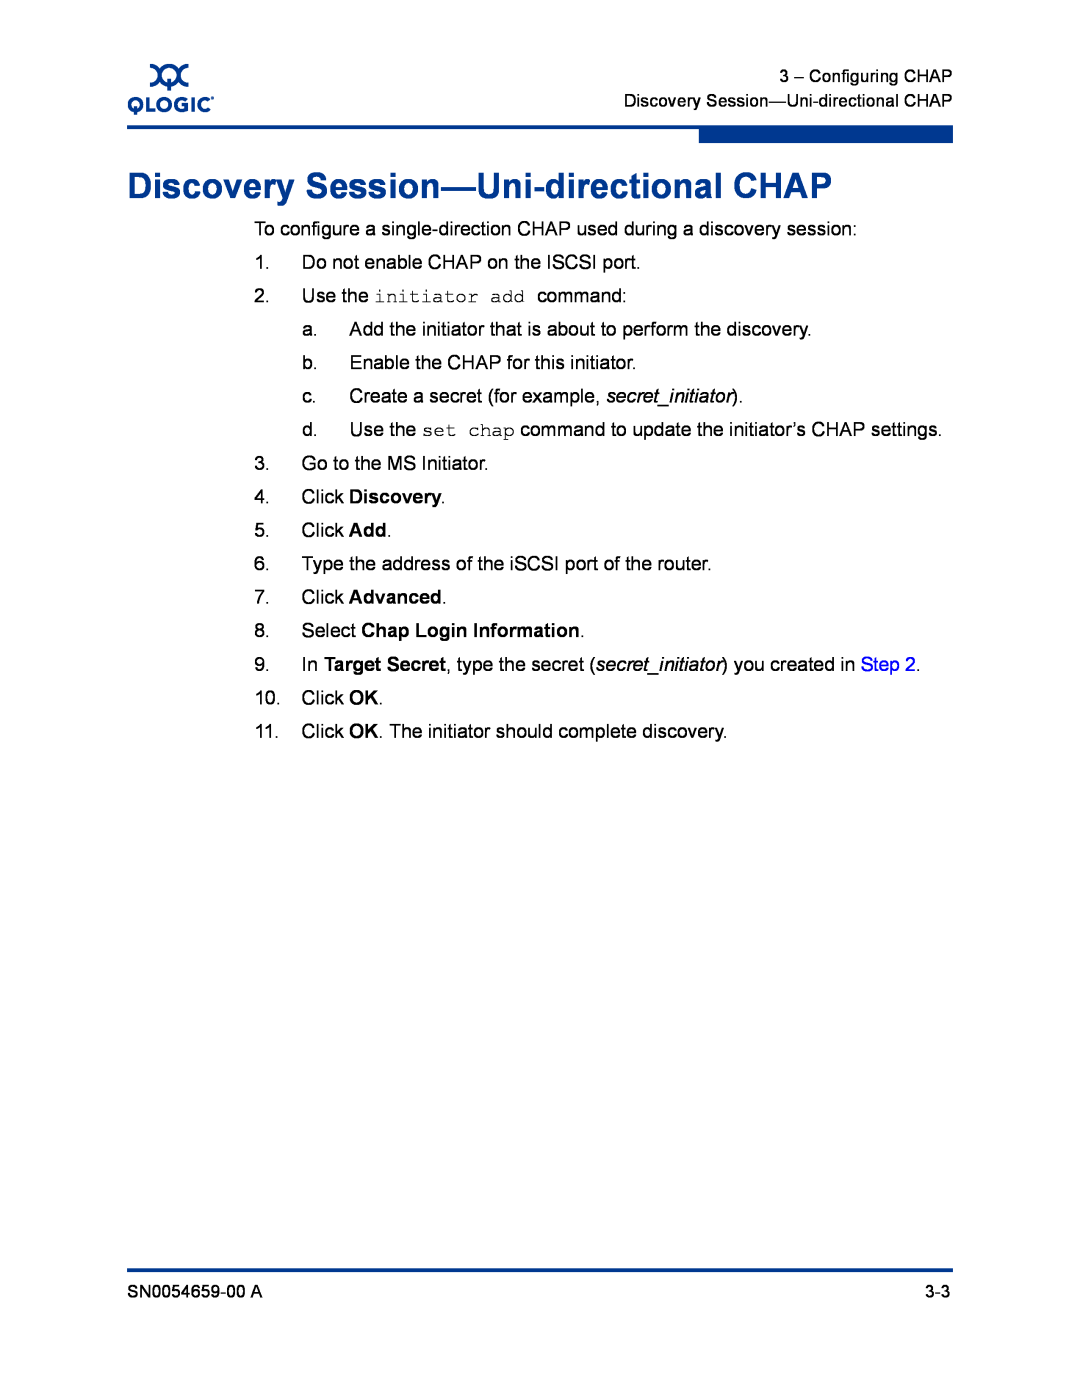 Q-Logic ISR6142 manual Discovery Session-Uni-directional CHAP 